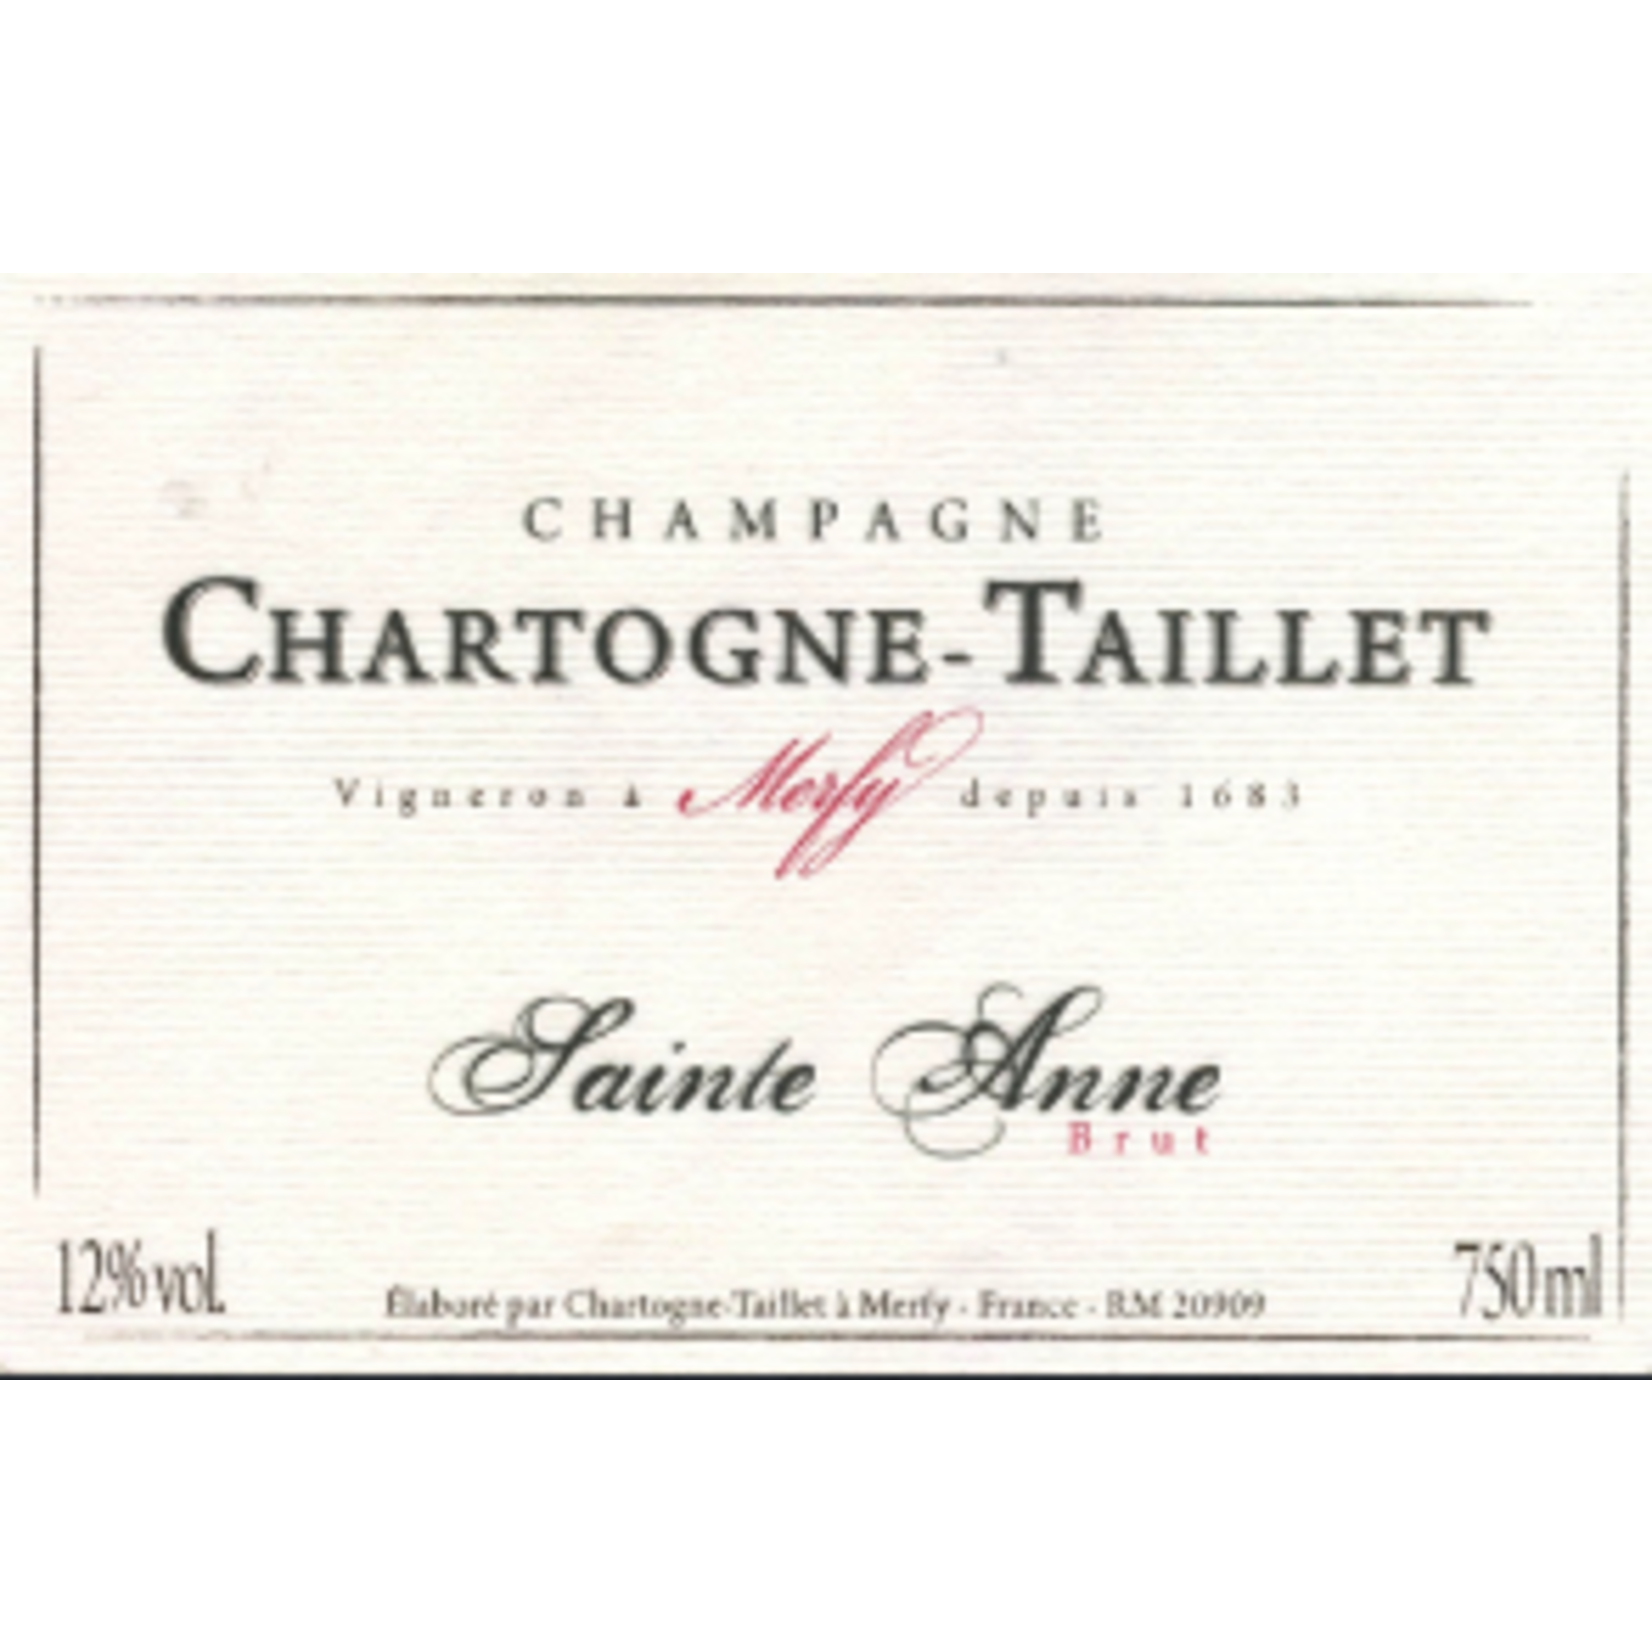 Chartogne-Taillet Chartogne-Taillet "Cuvee Sainte Anne" Brut Champagne, France